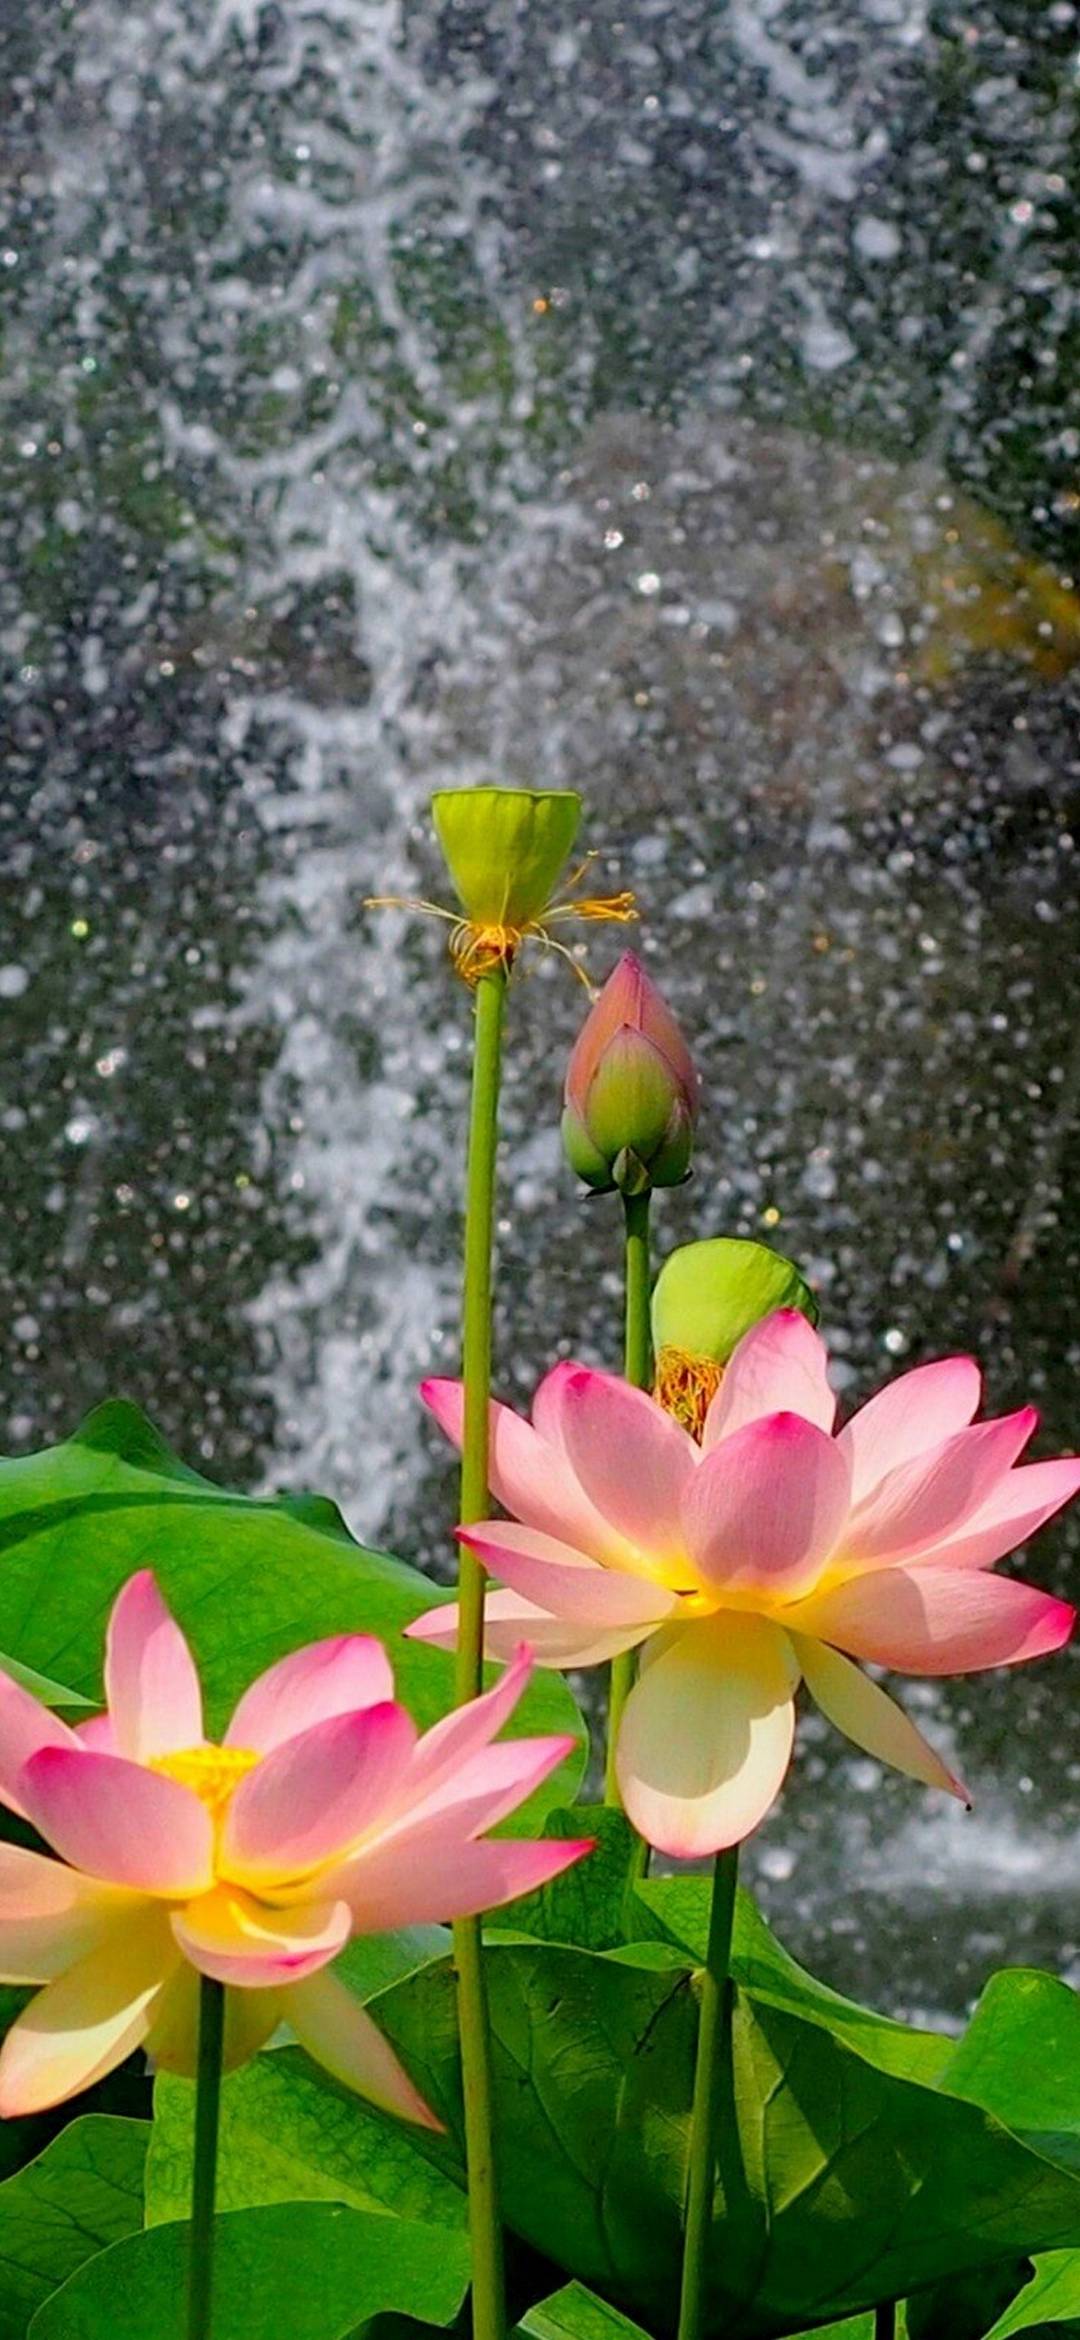 Lotus Flower Garden Wallpaper Free Lotus Flower Garden Background